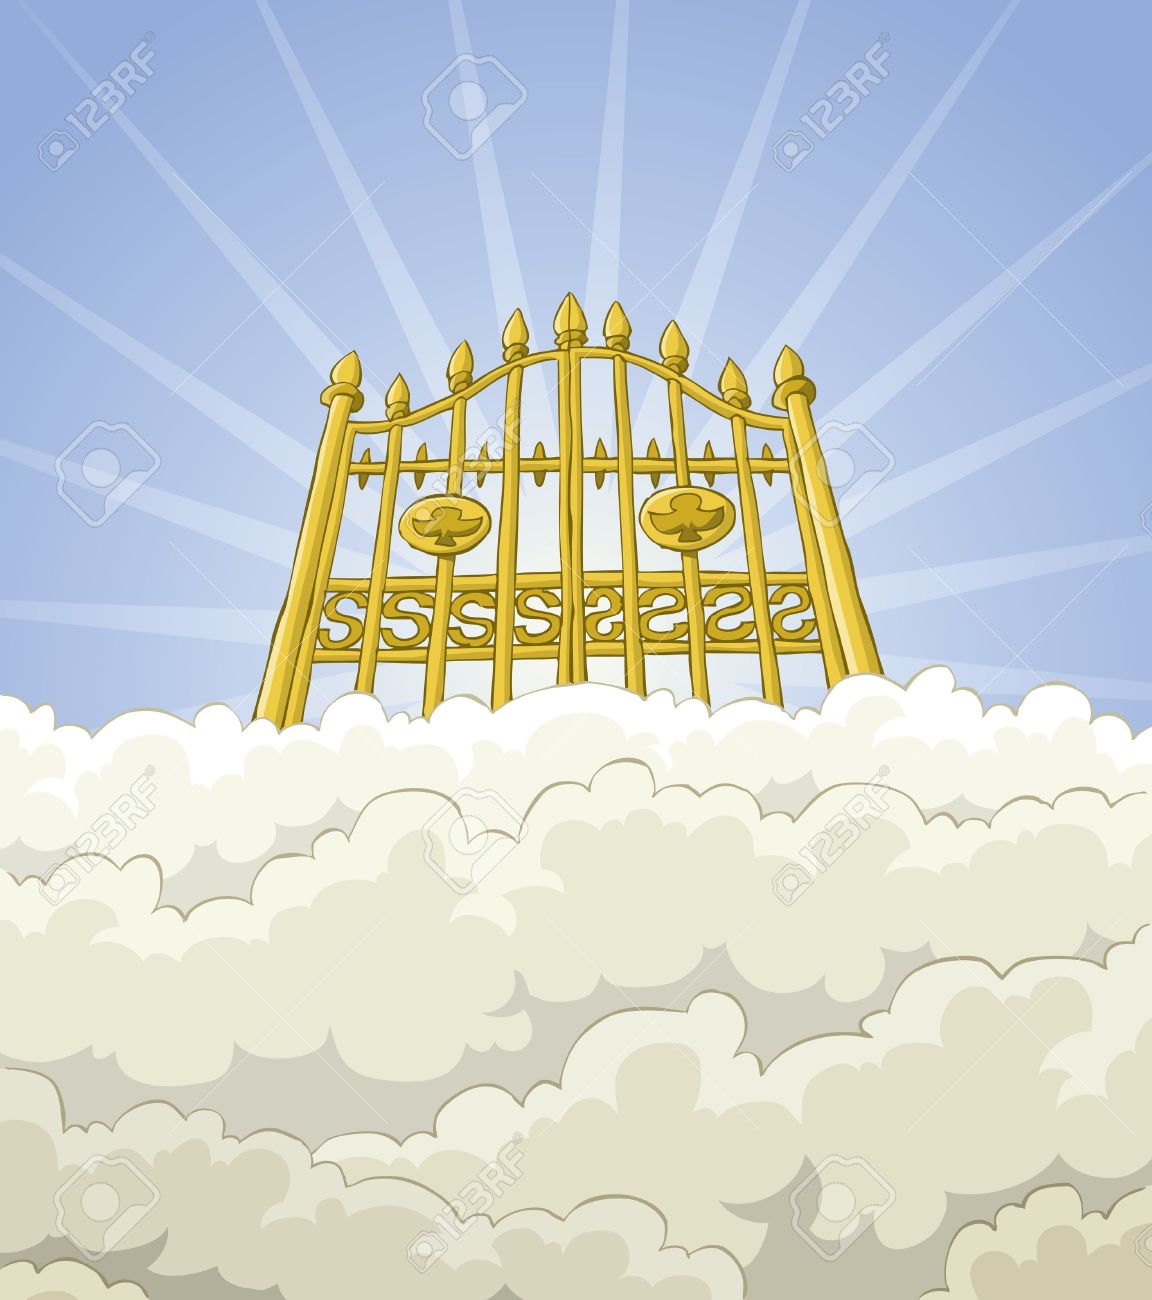 heaven's gate clip art free - photo #8